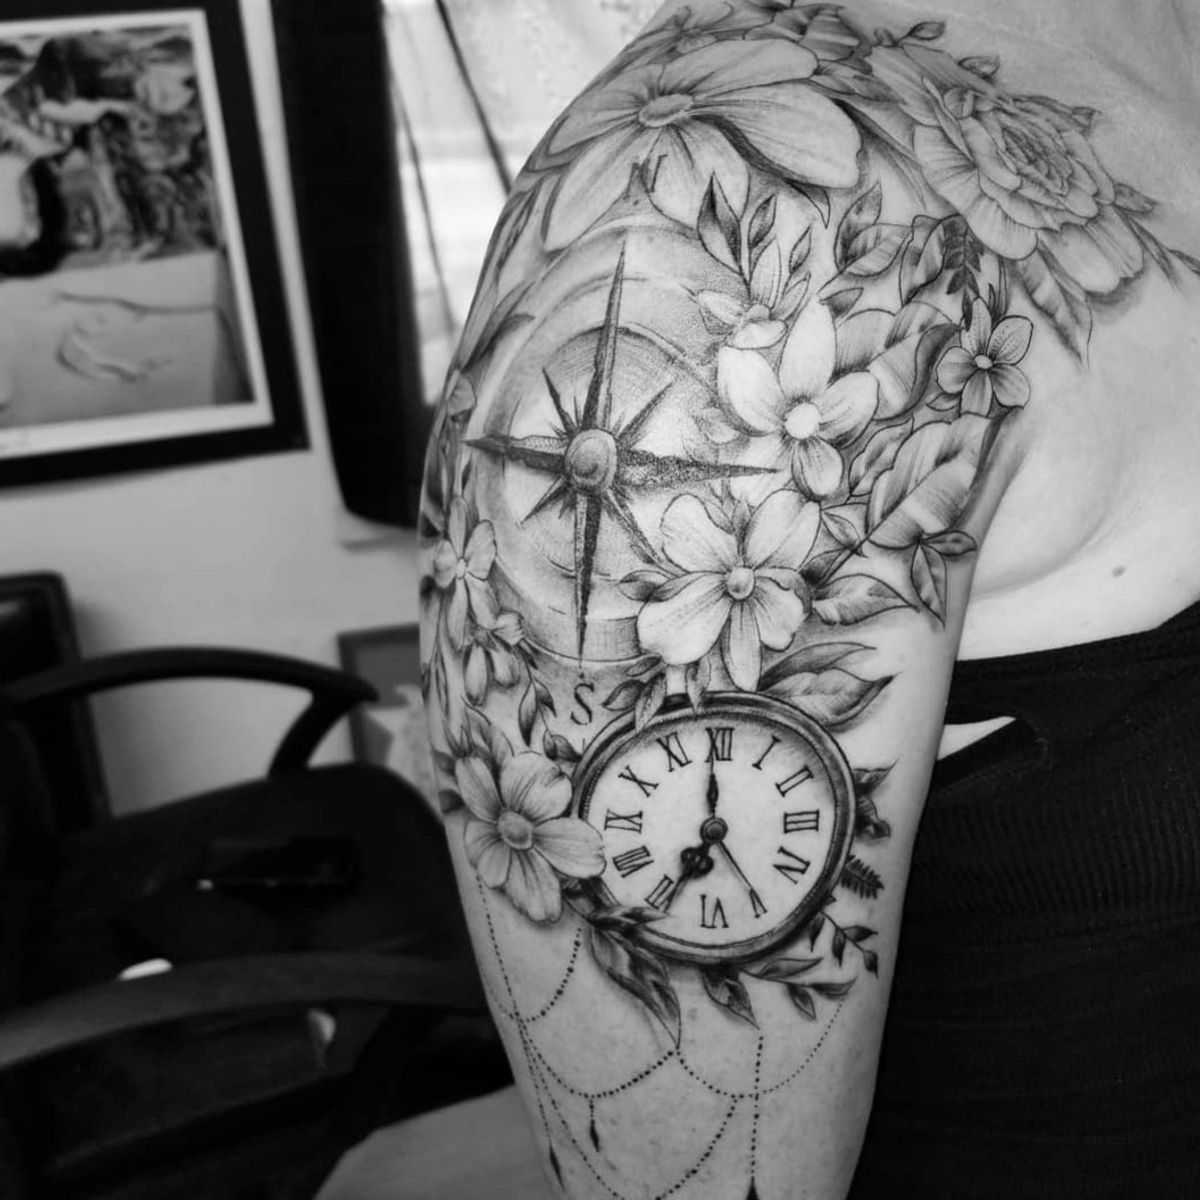 Tattoo uploaded by Kris Haley • Tattoodo